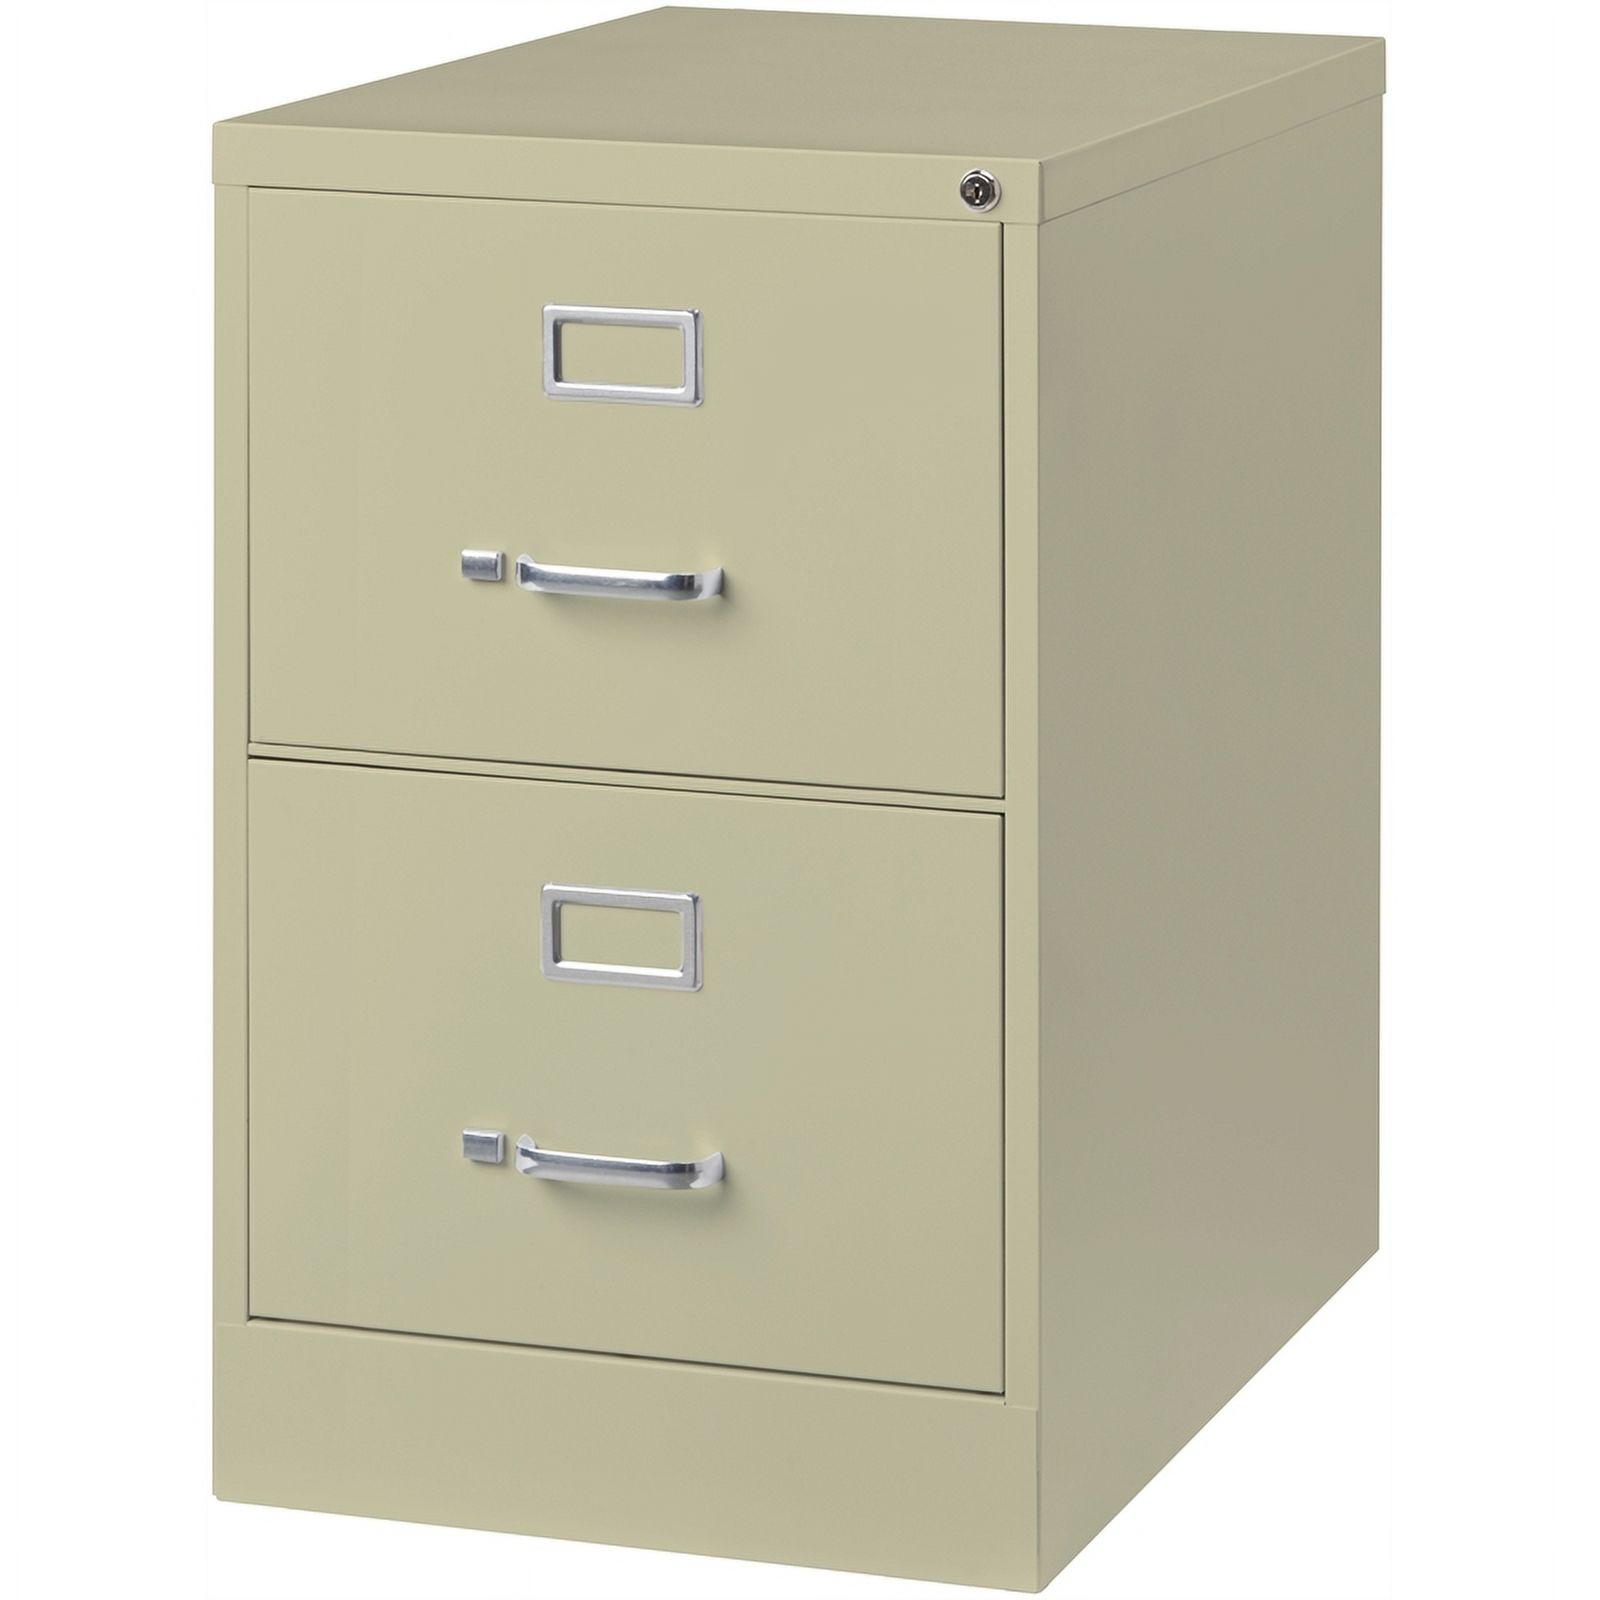 Scranton & Co 26.5" 2-Drawer Metal Legal Width Vertical File Cabinet in Beige - image 3 of 5